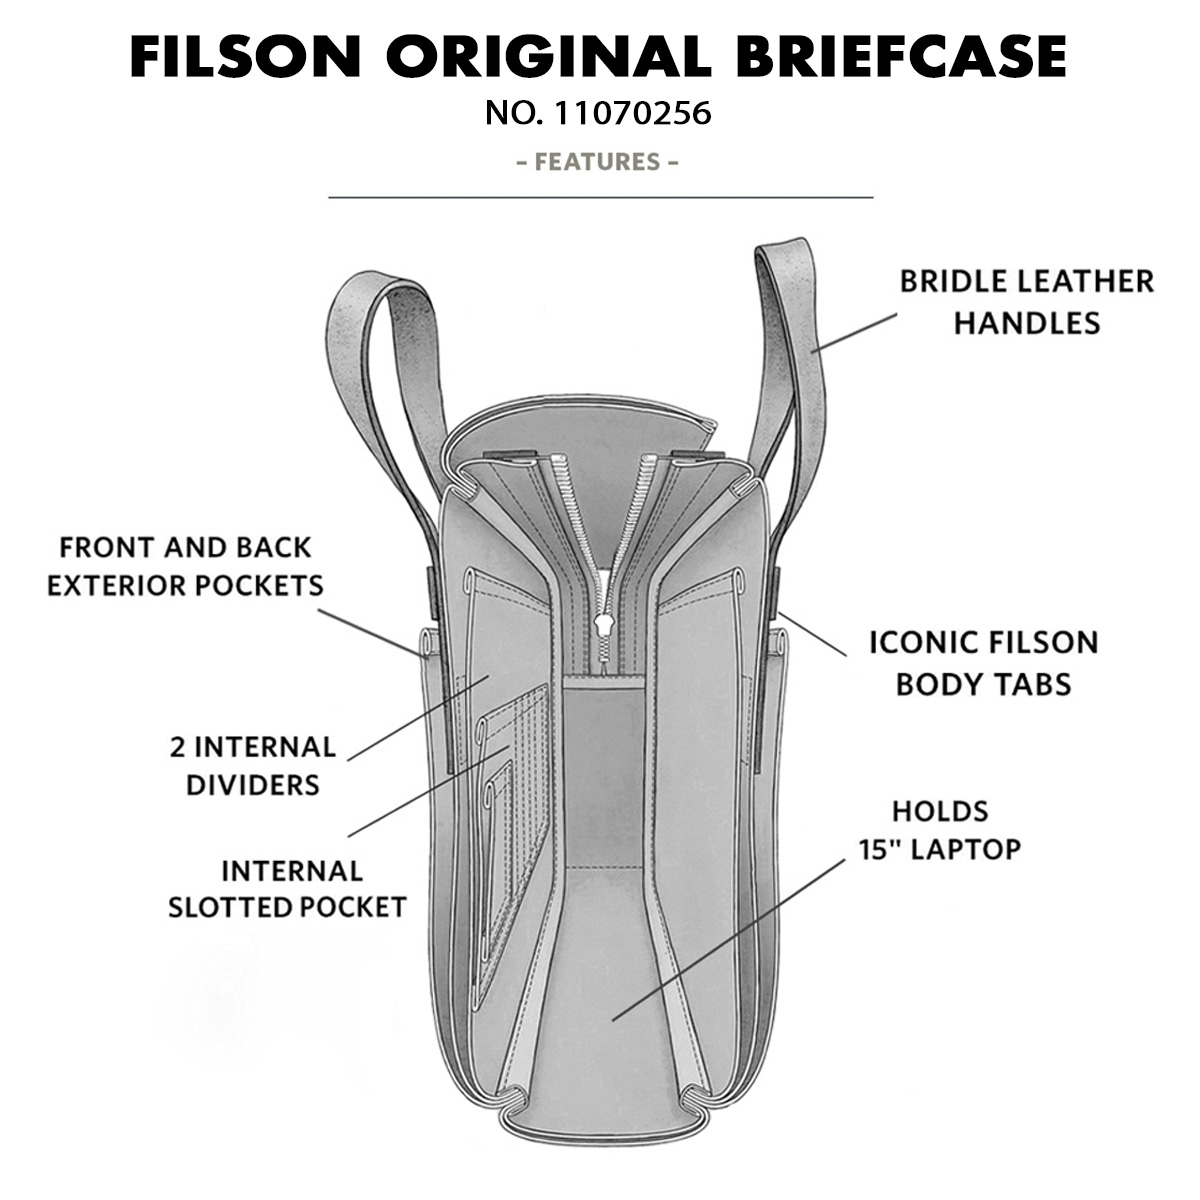 Filson Original Briefcase 11070256 Tan, features